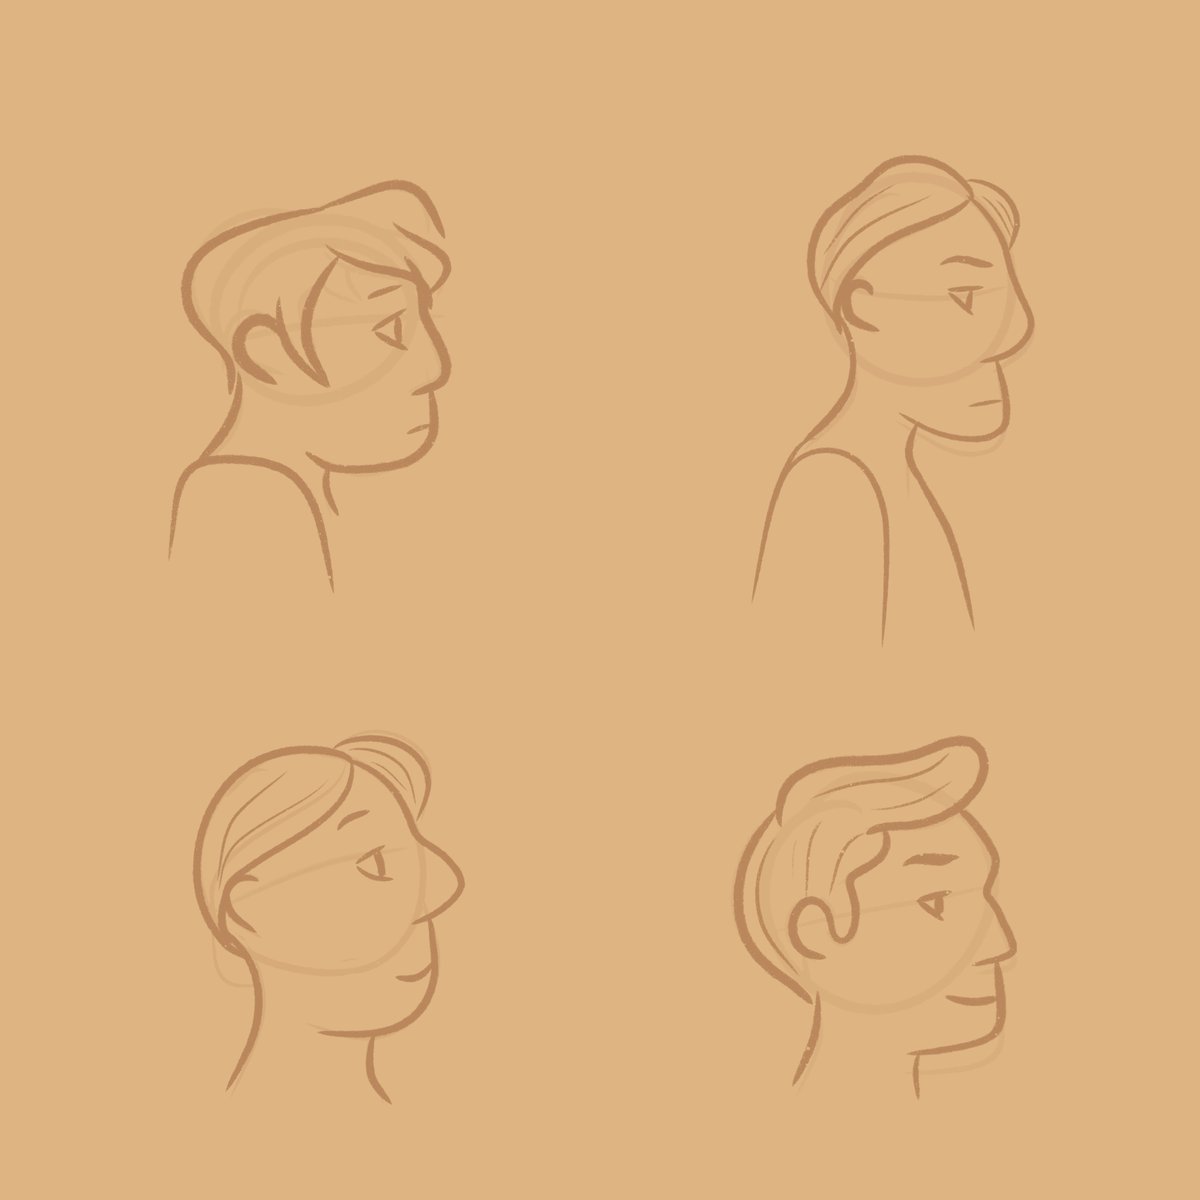 Second batch of side profile sketches…
#sketch #illustration #DigitalArtist #learntodraw